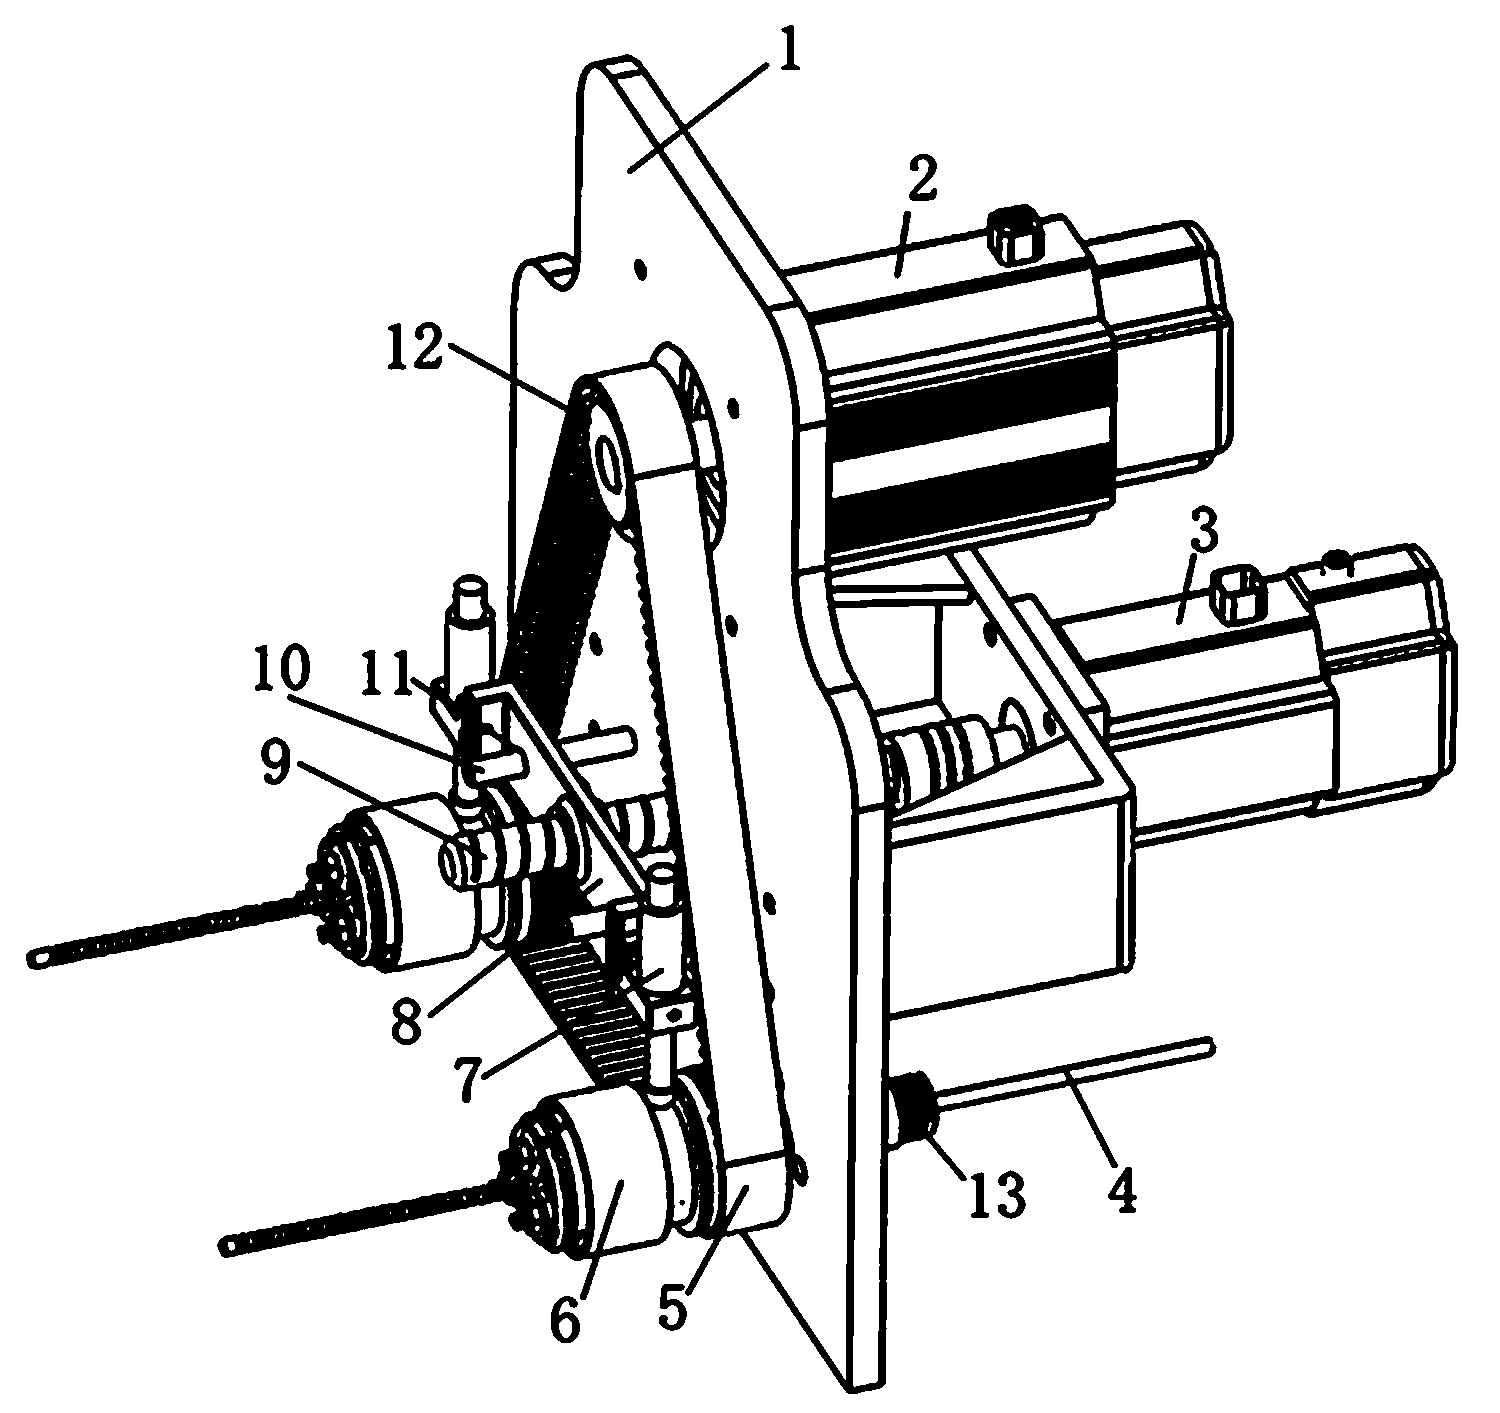 Machine head component of tubing thread forming machine